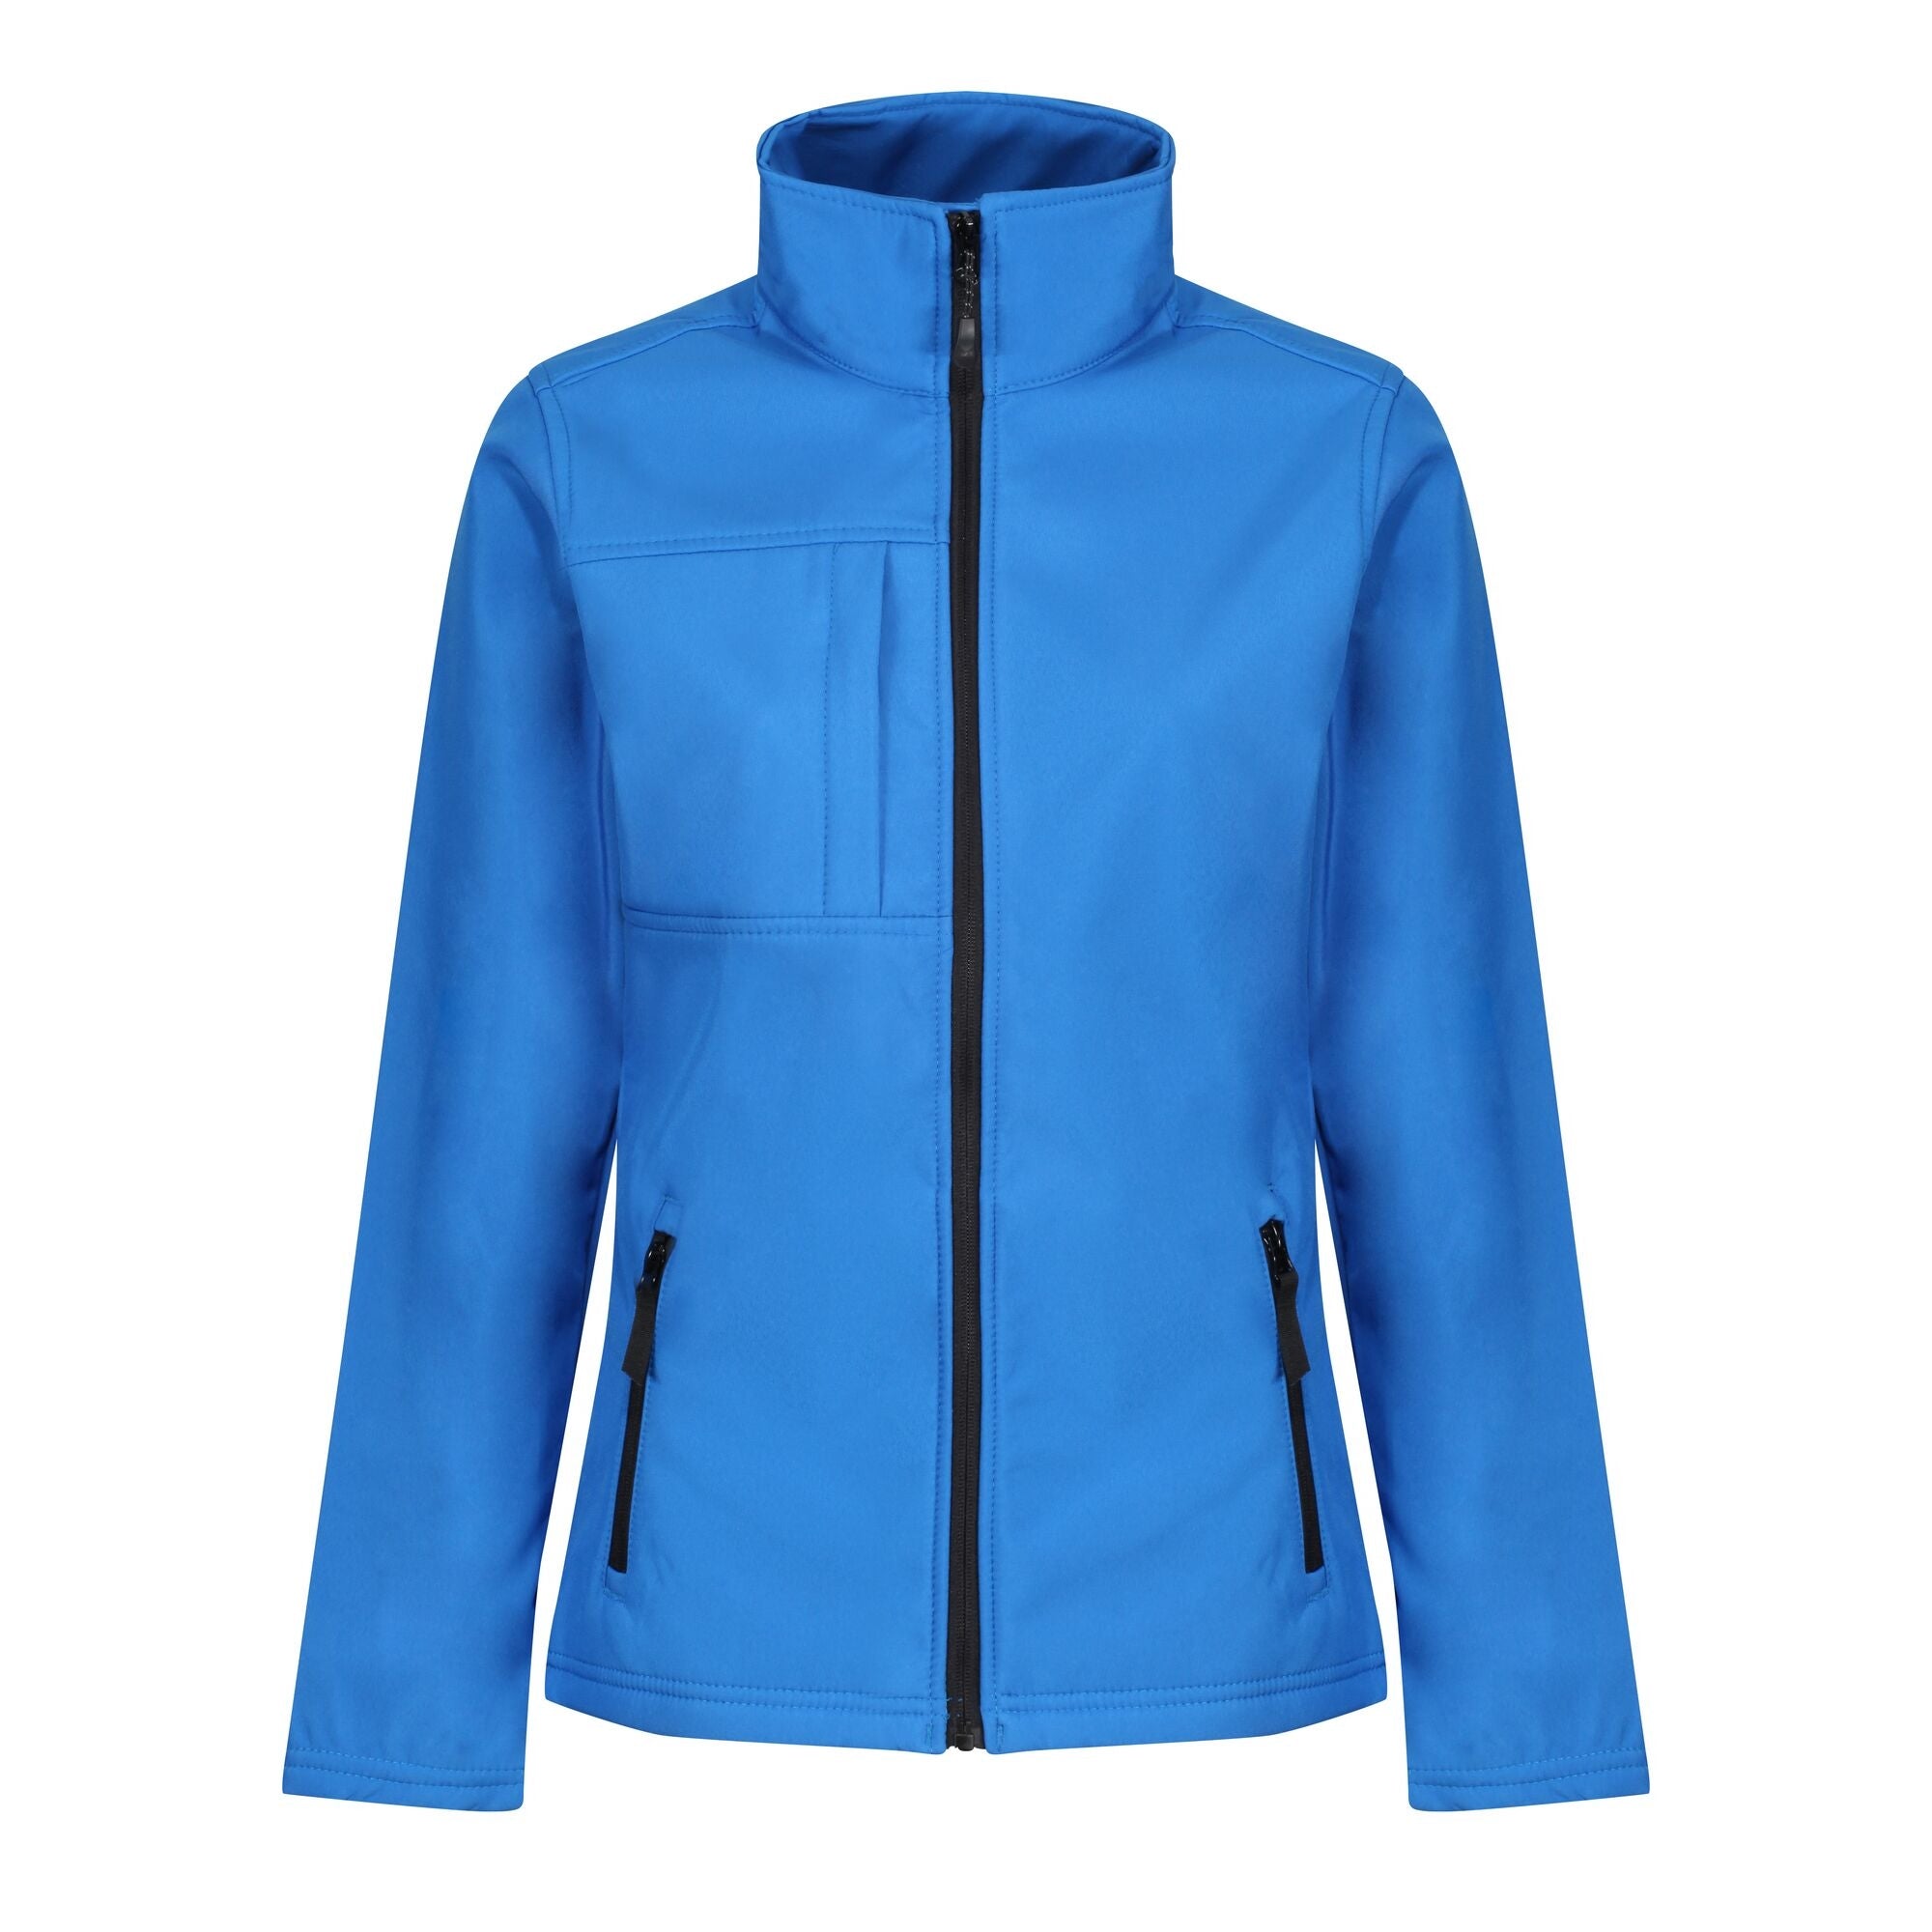 Regatta Ladies Octagon II Softshell Jacket - Oxford Blue/Black